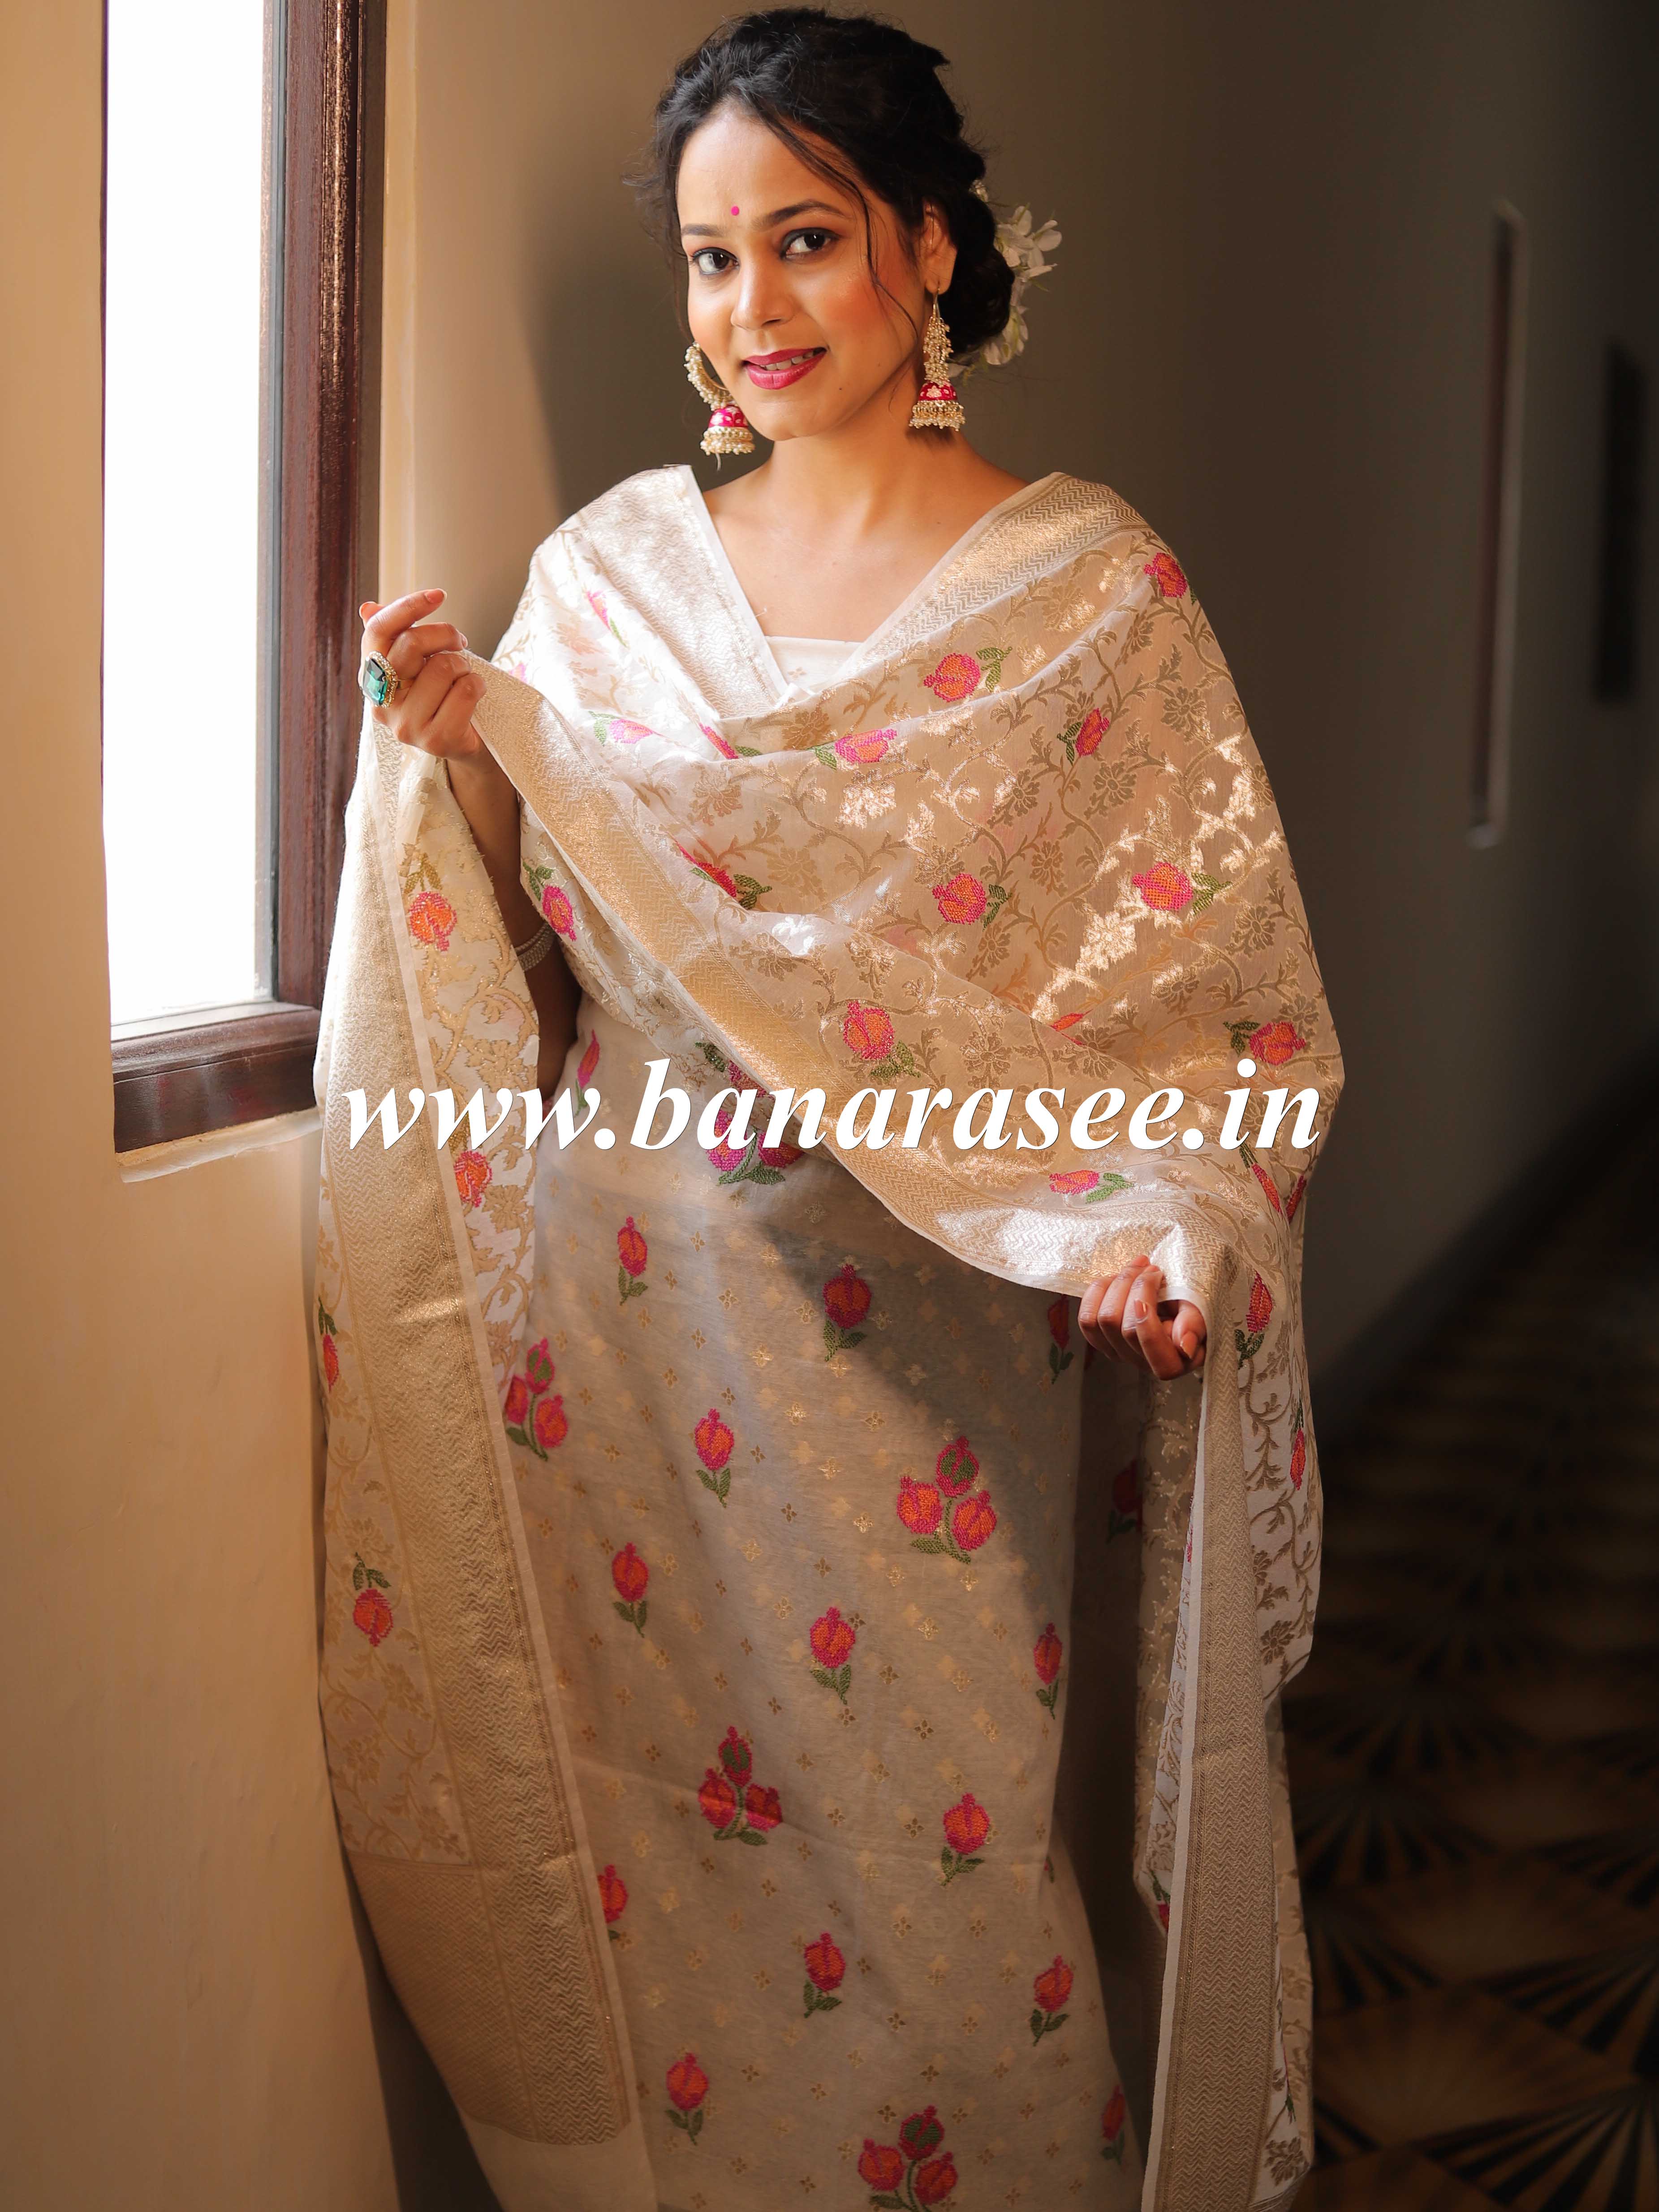 Banarasee Handloom Chanderi Silk Salwar Kameez Fabric With Resham Embroidery-White